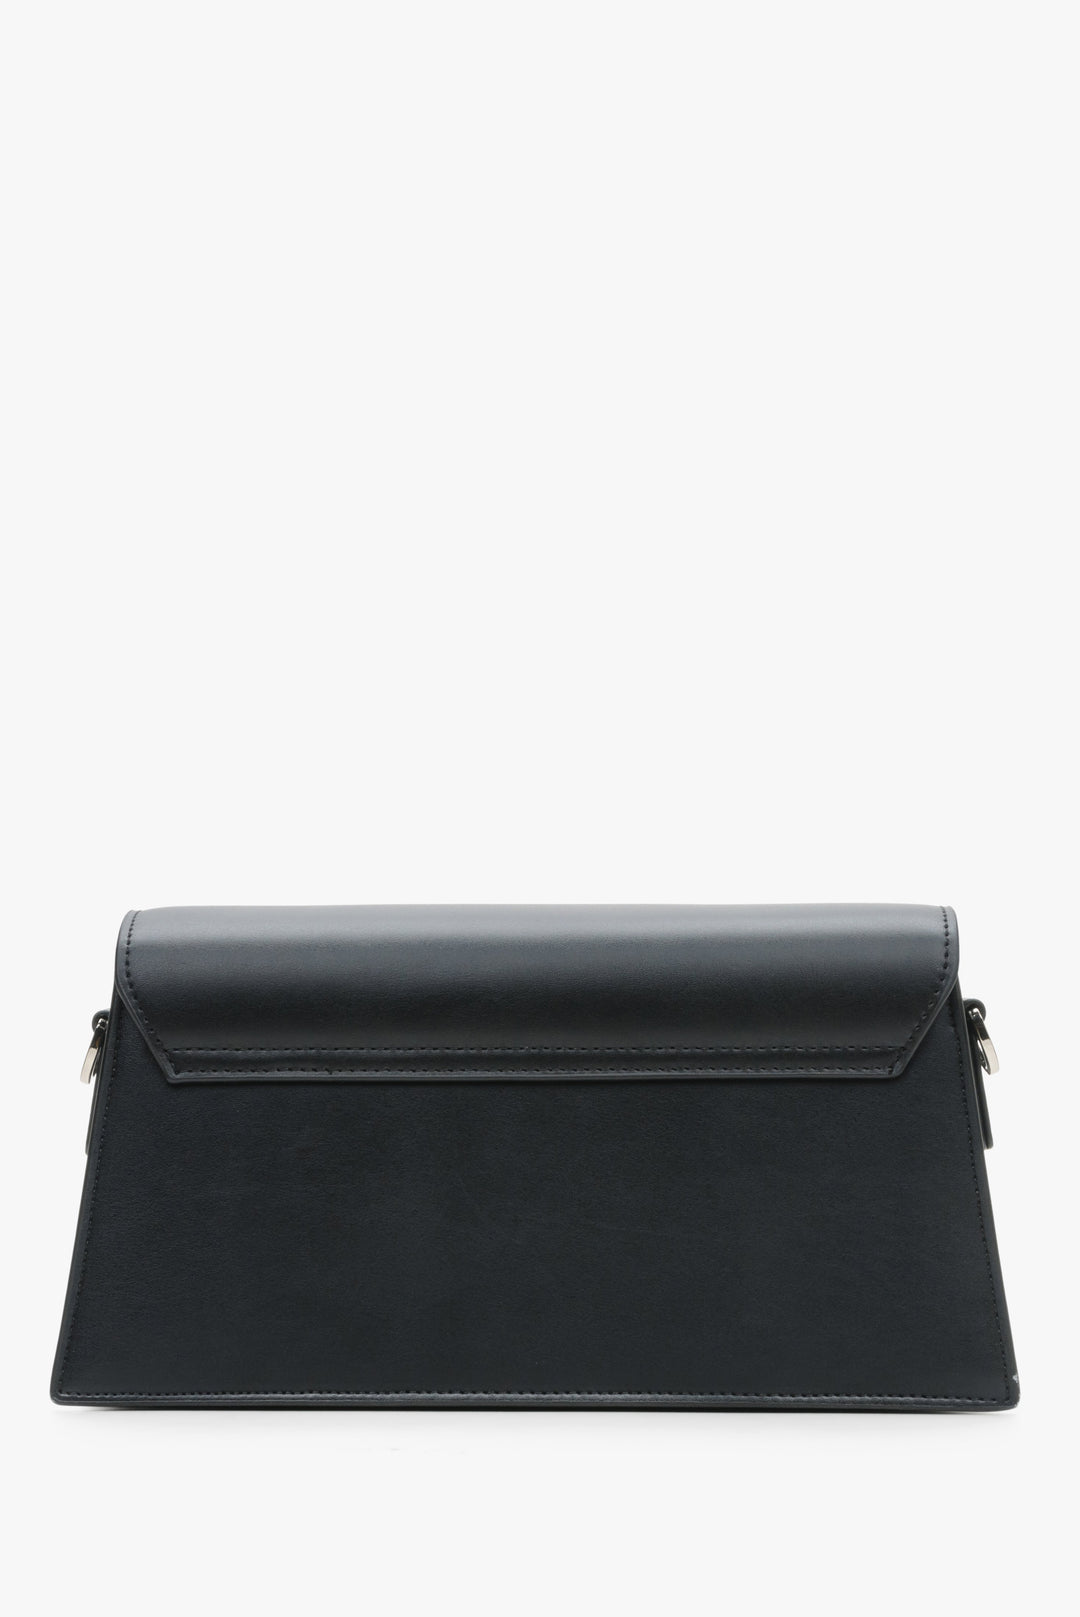 Women's black leather handbag by Estro - reverse side.